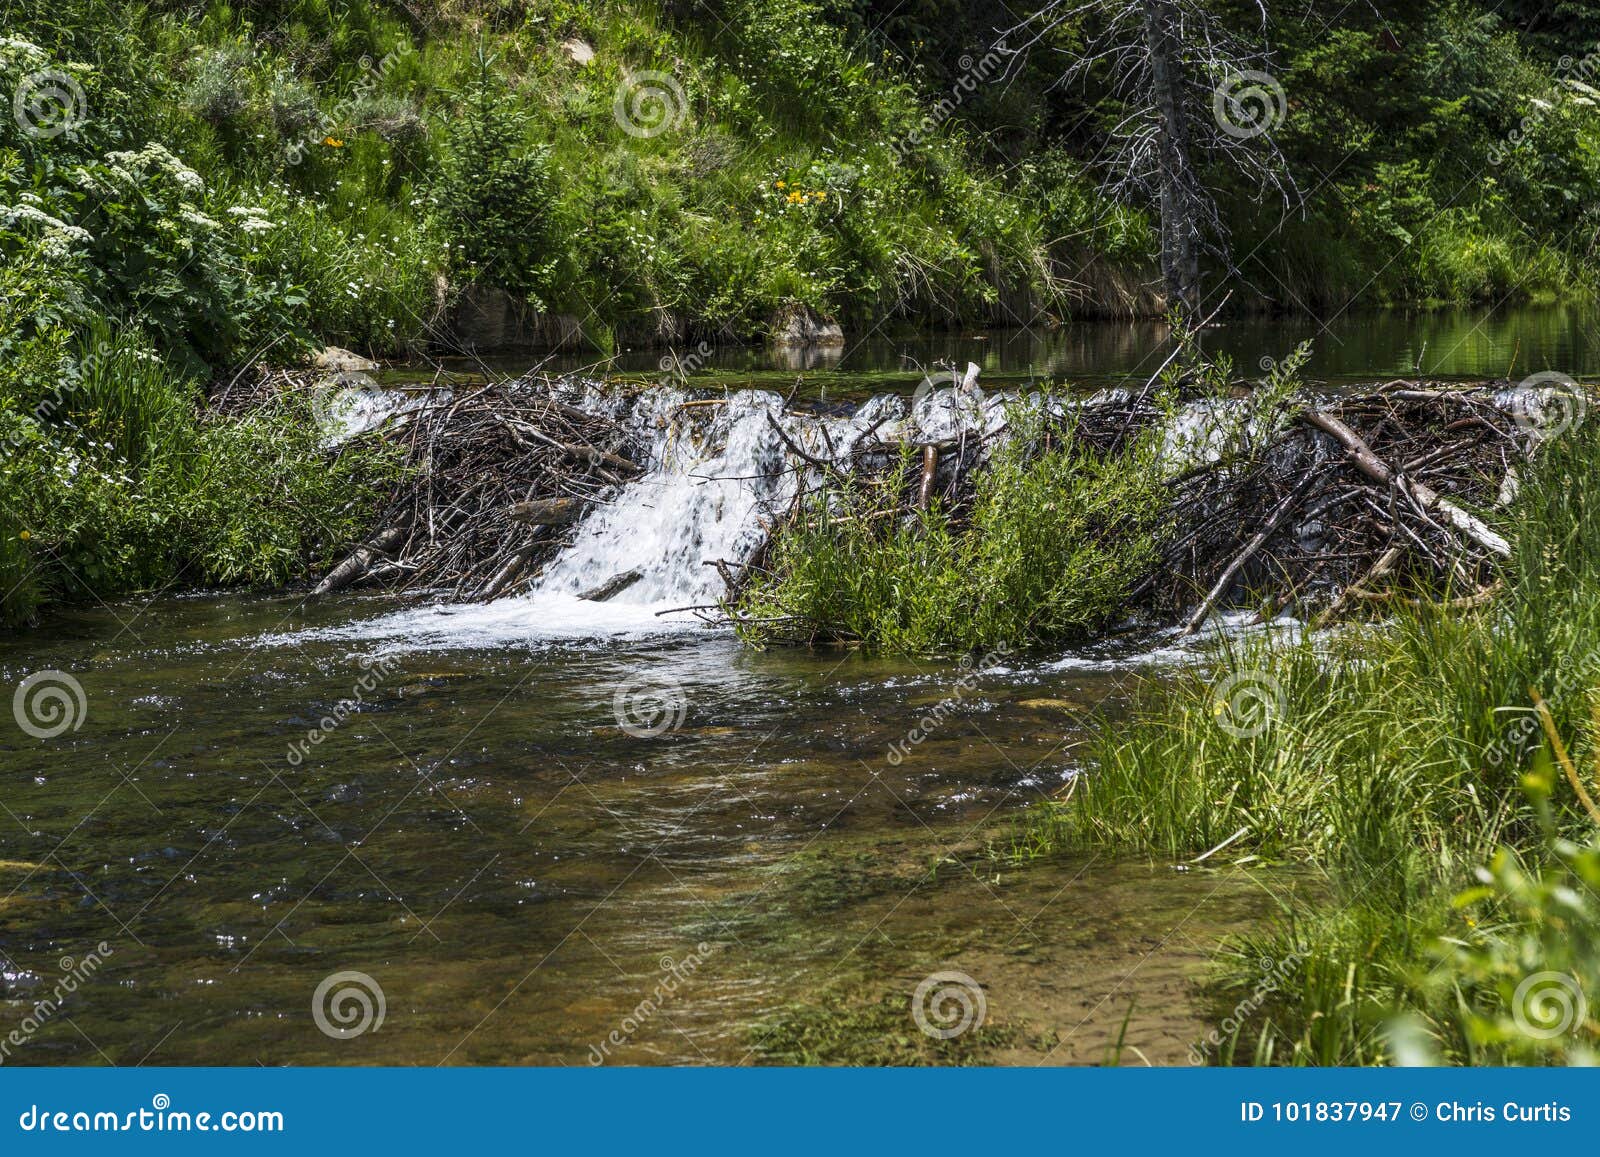 beaver dam on huntington creek in emery county utah